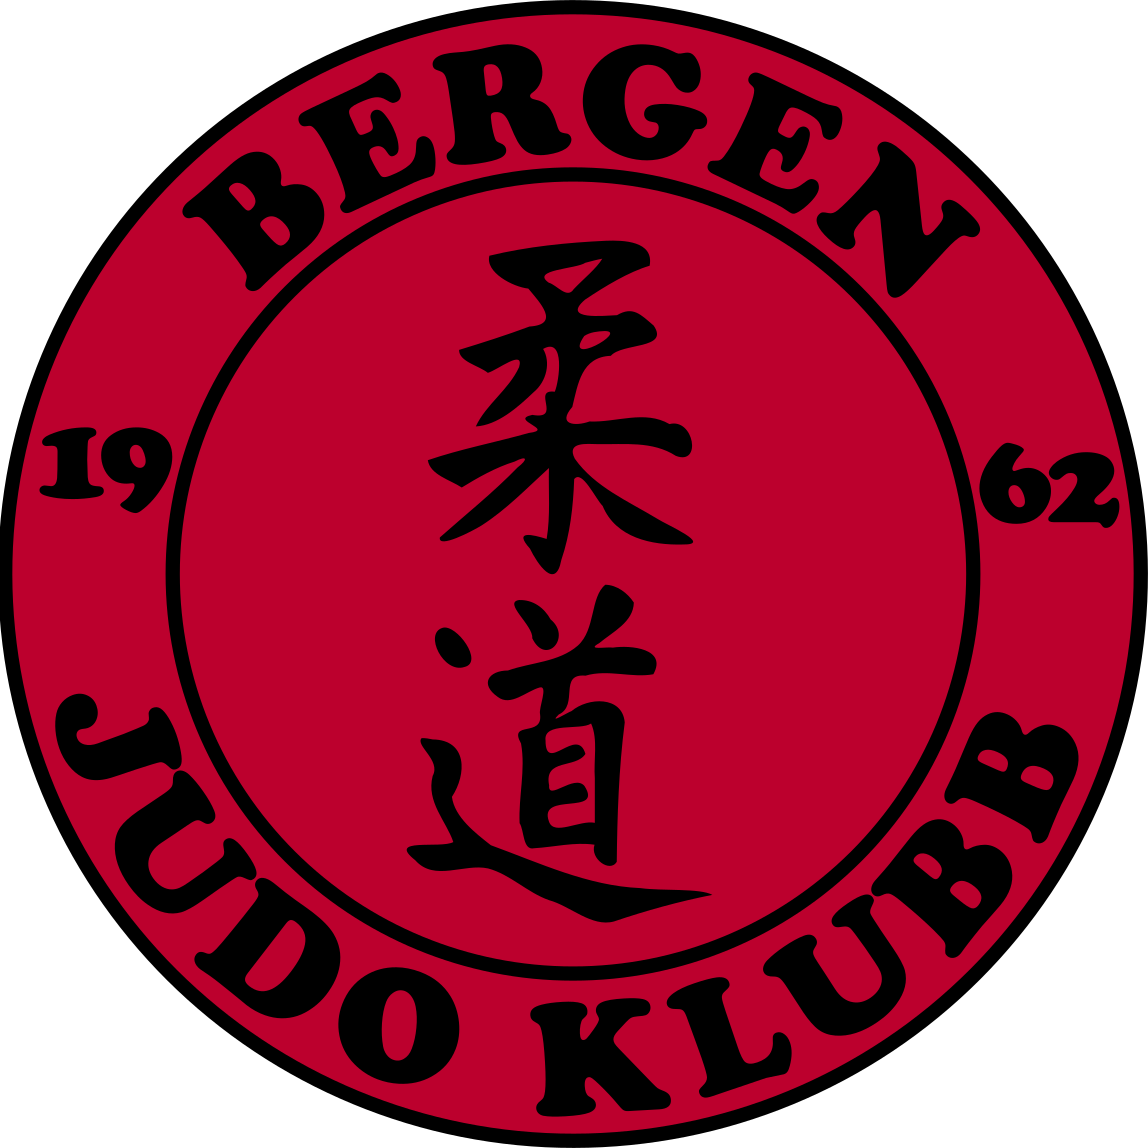 Bergen judoklubb